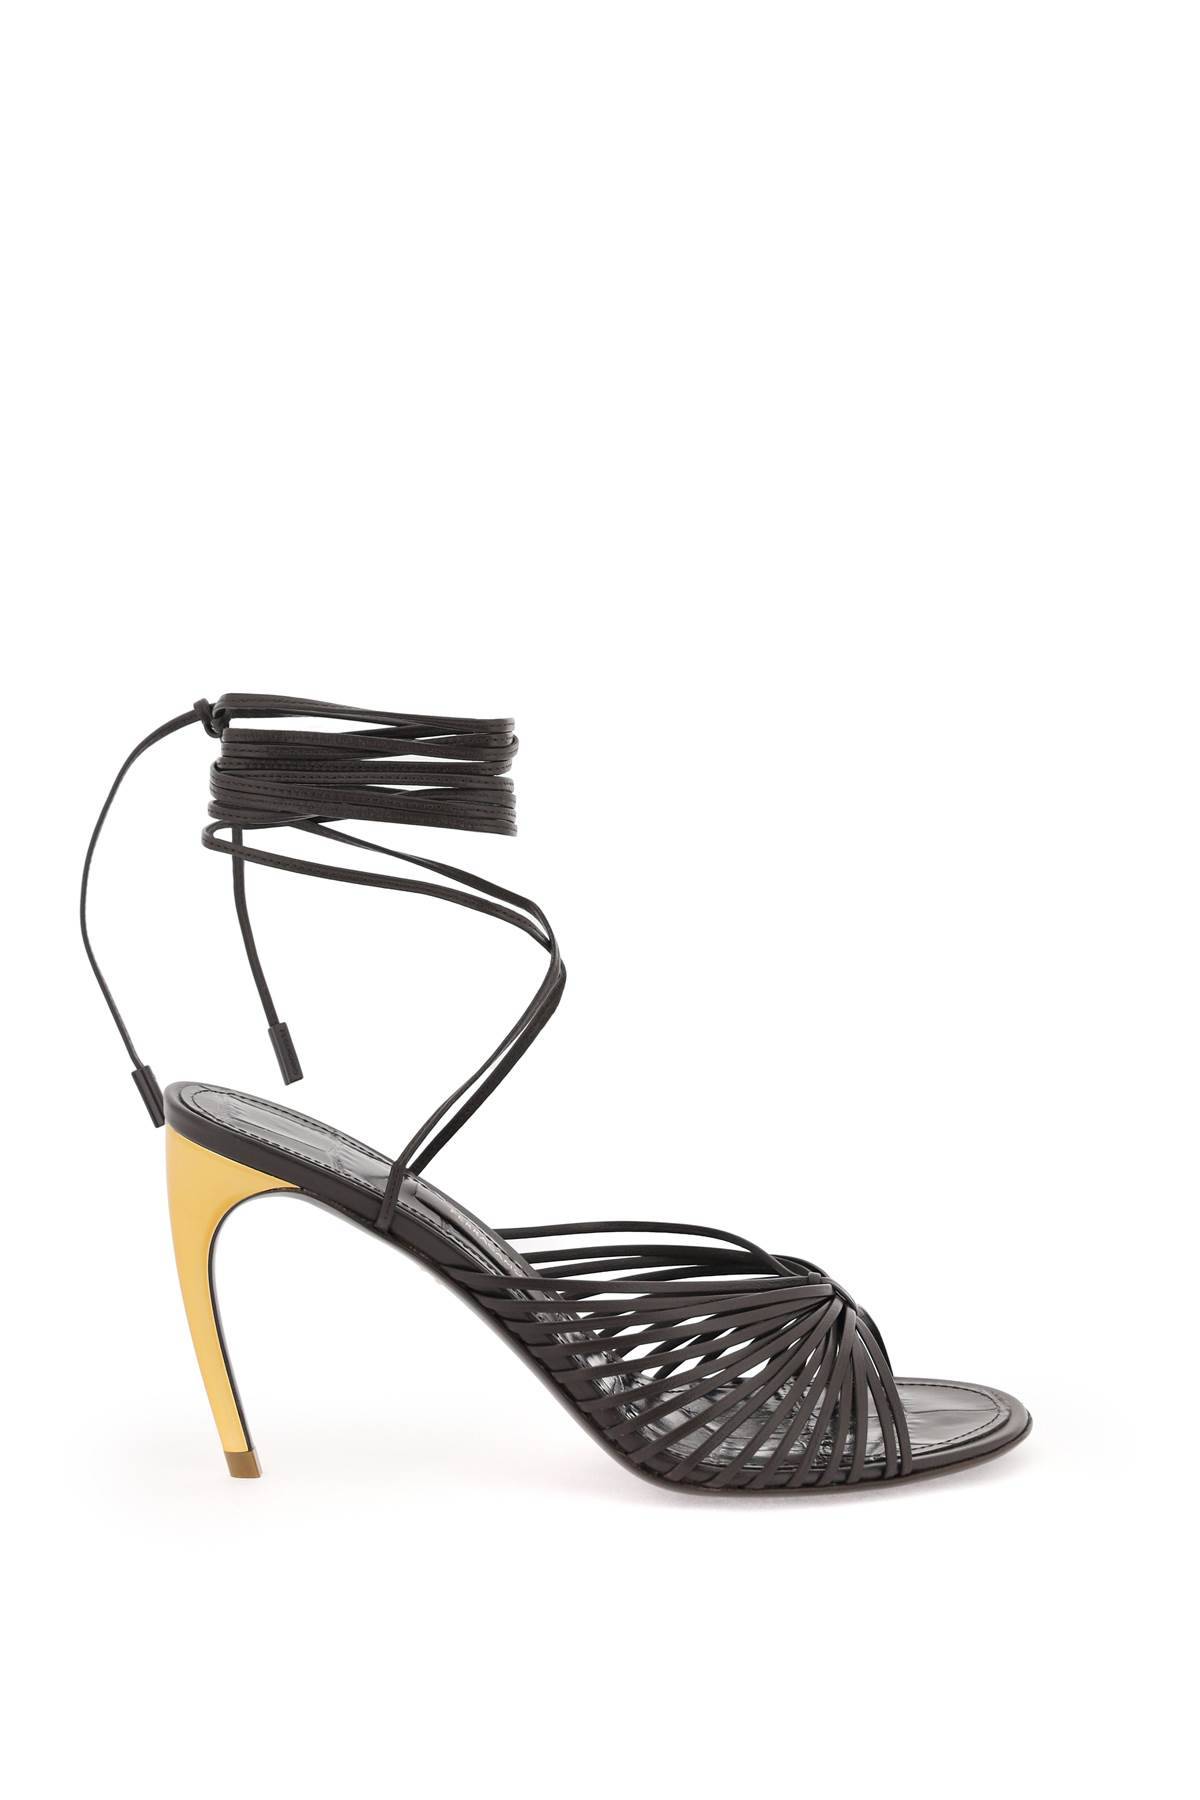 Ferragamo FERRAGAMO curved heel sandals with elevated